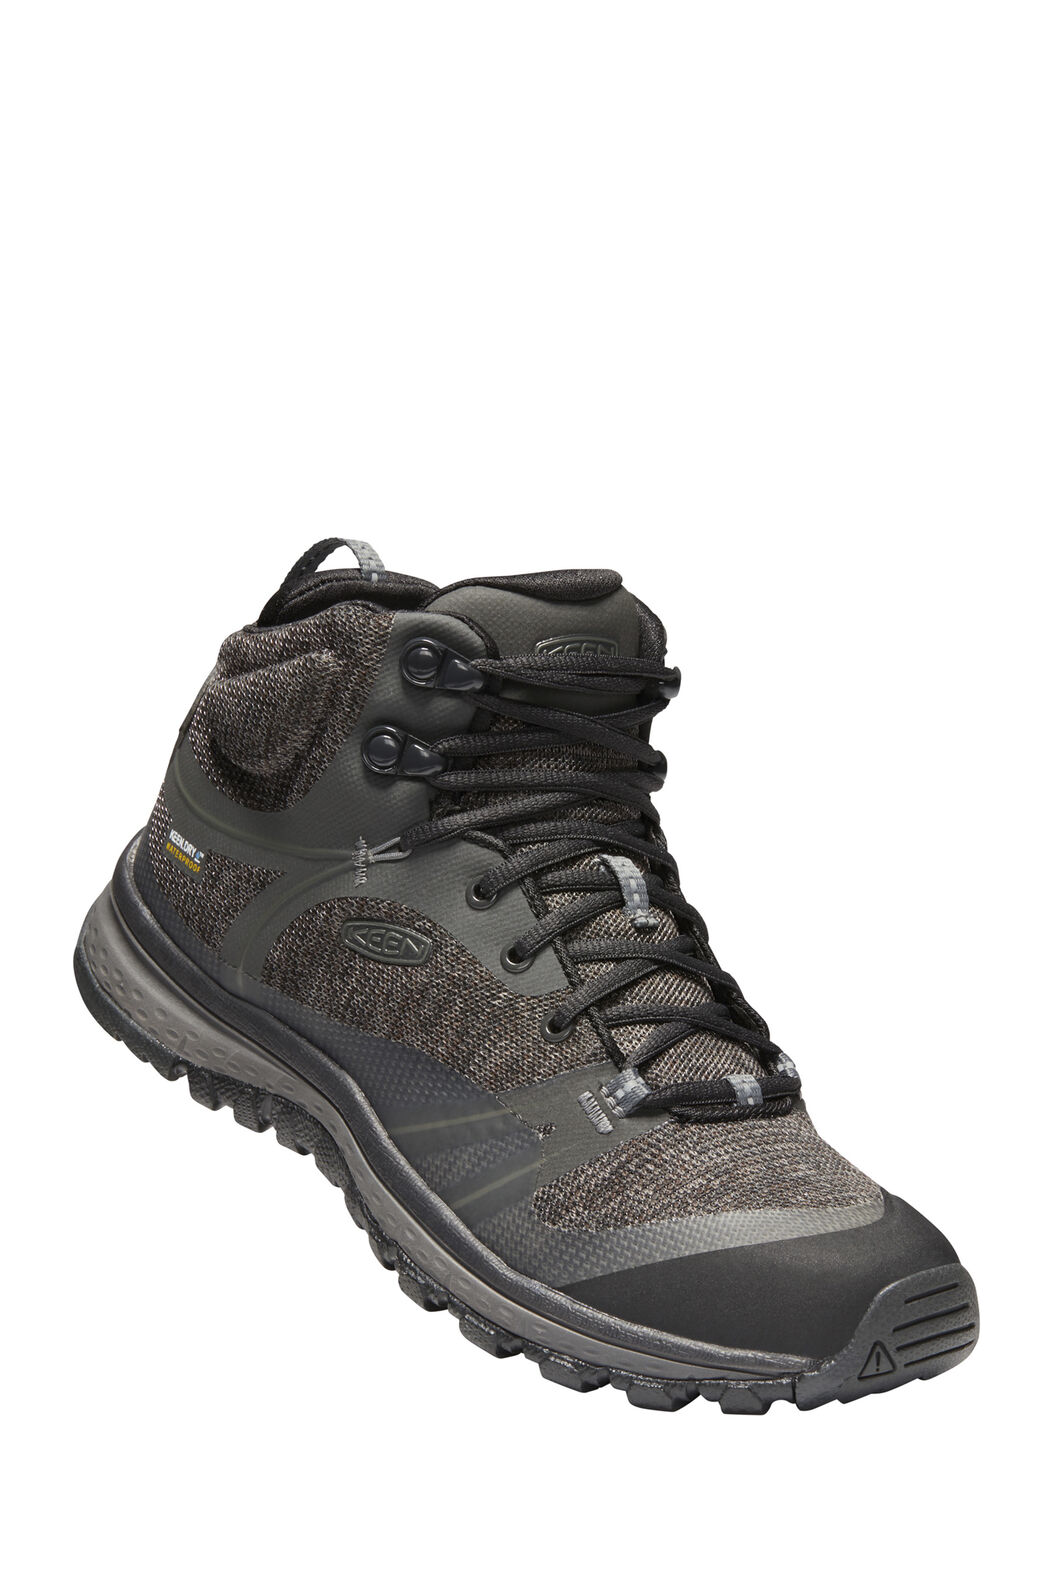 Keen Women's Terradora WP Hiking Boots | Macpac